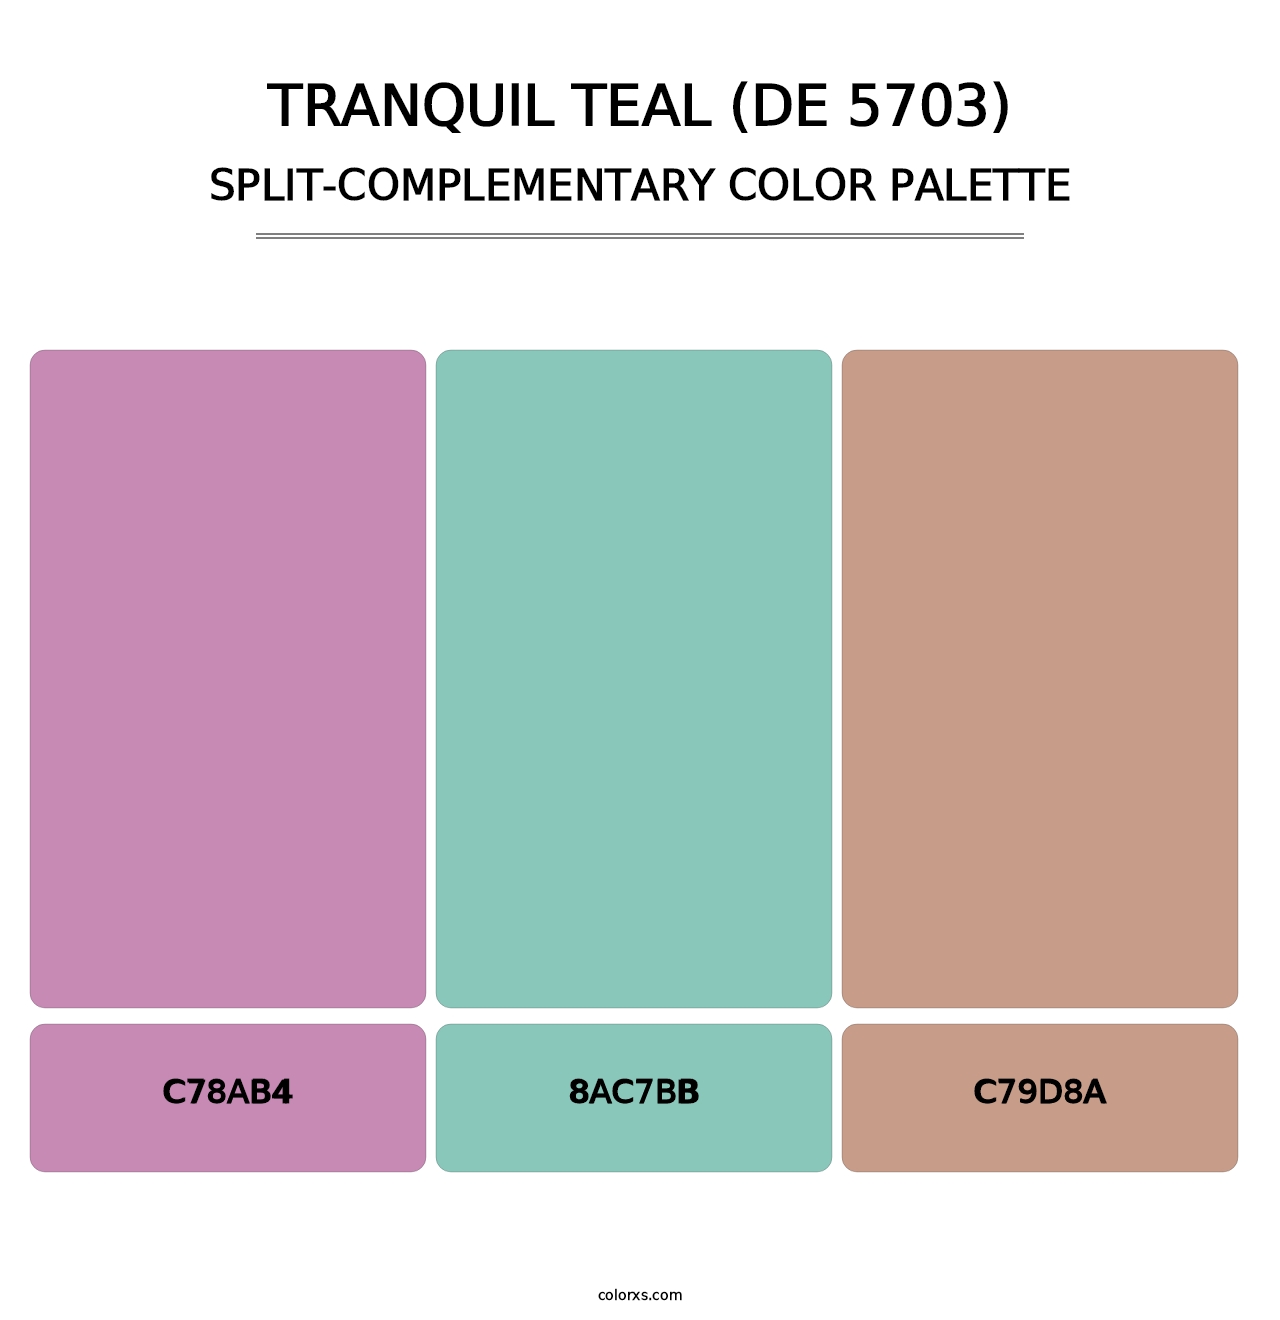 Tranquil Teal (DE 5703) - Split-Complementary Color Palette